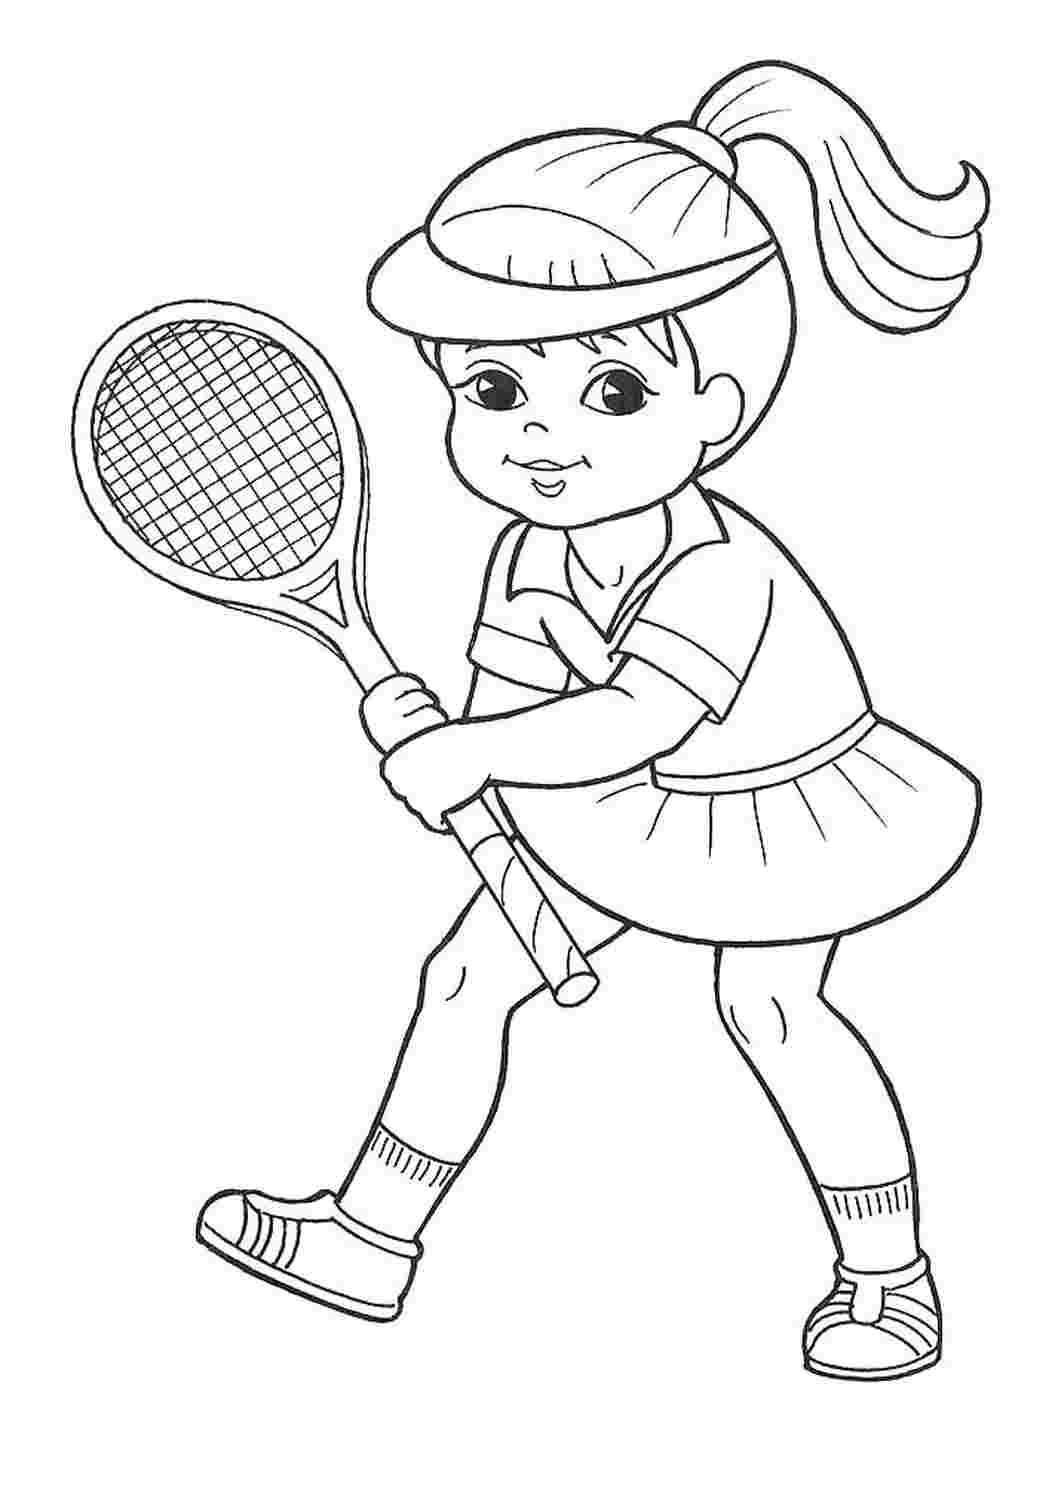 Теннис рисунок